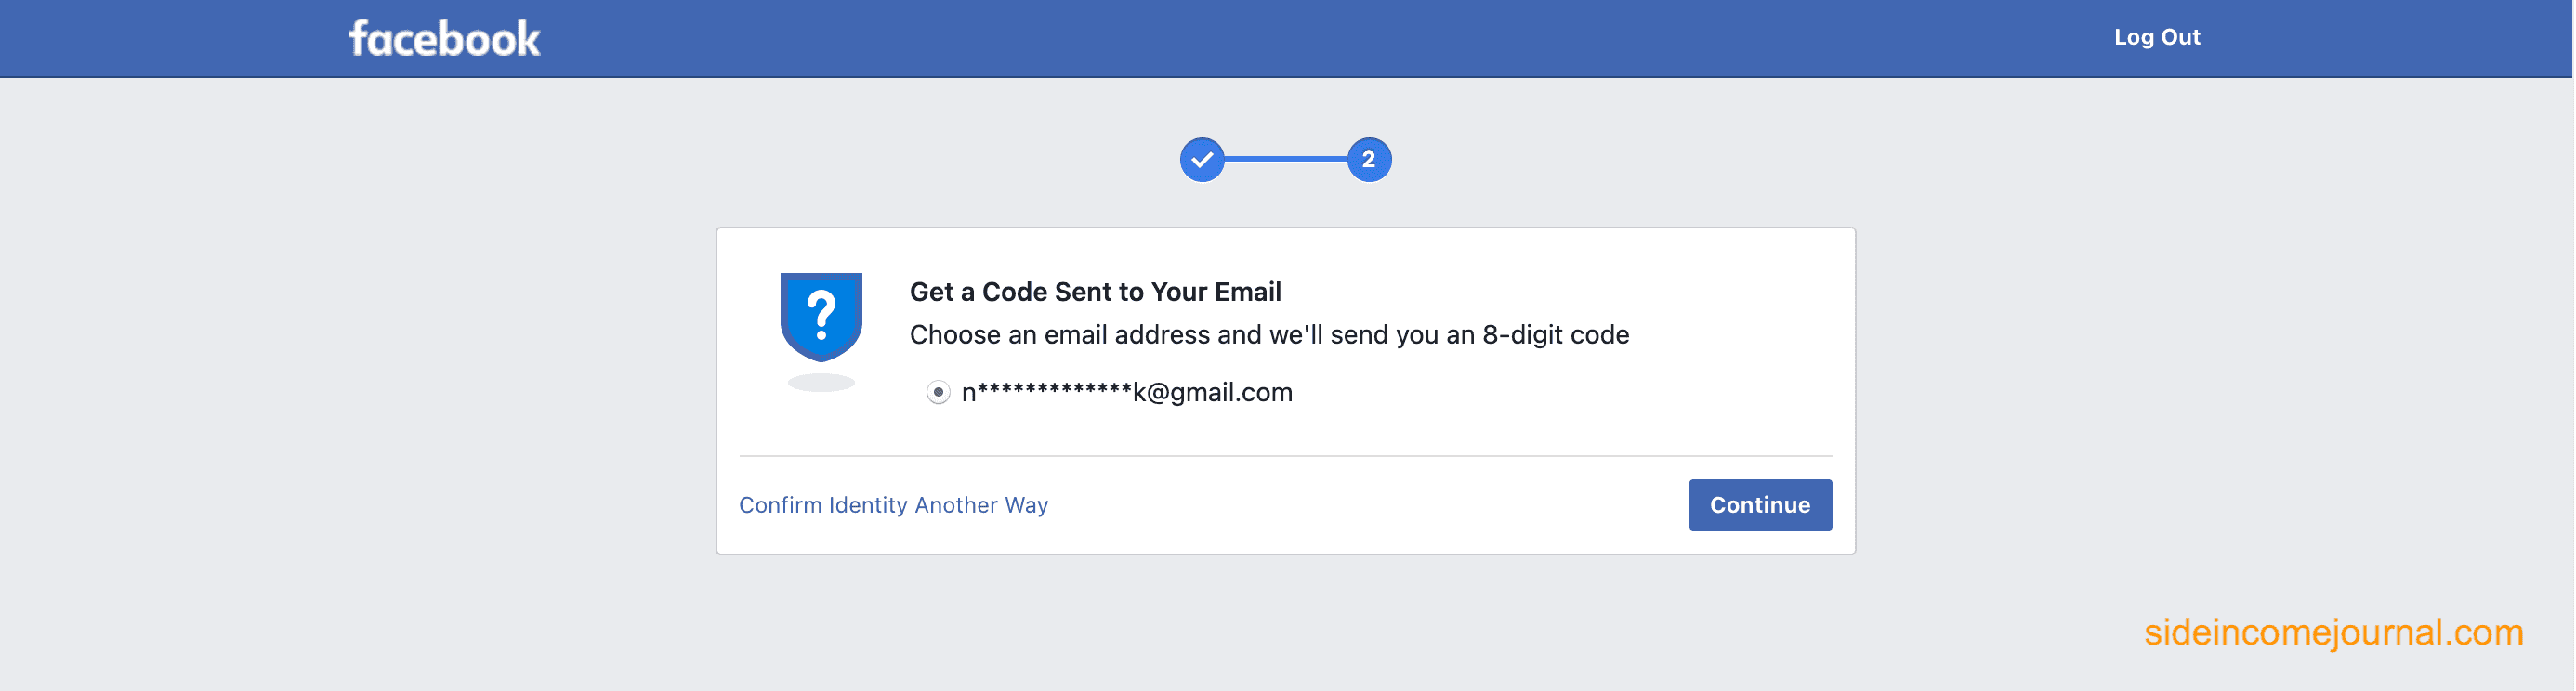 Mail www facebook com login Facebook Scam: